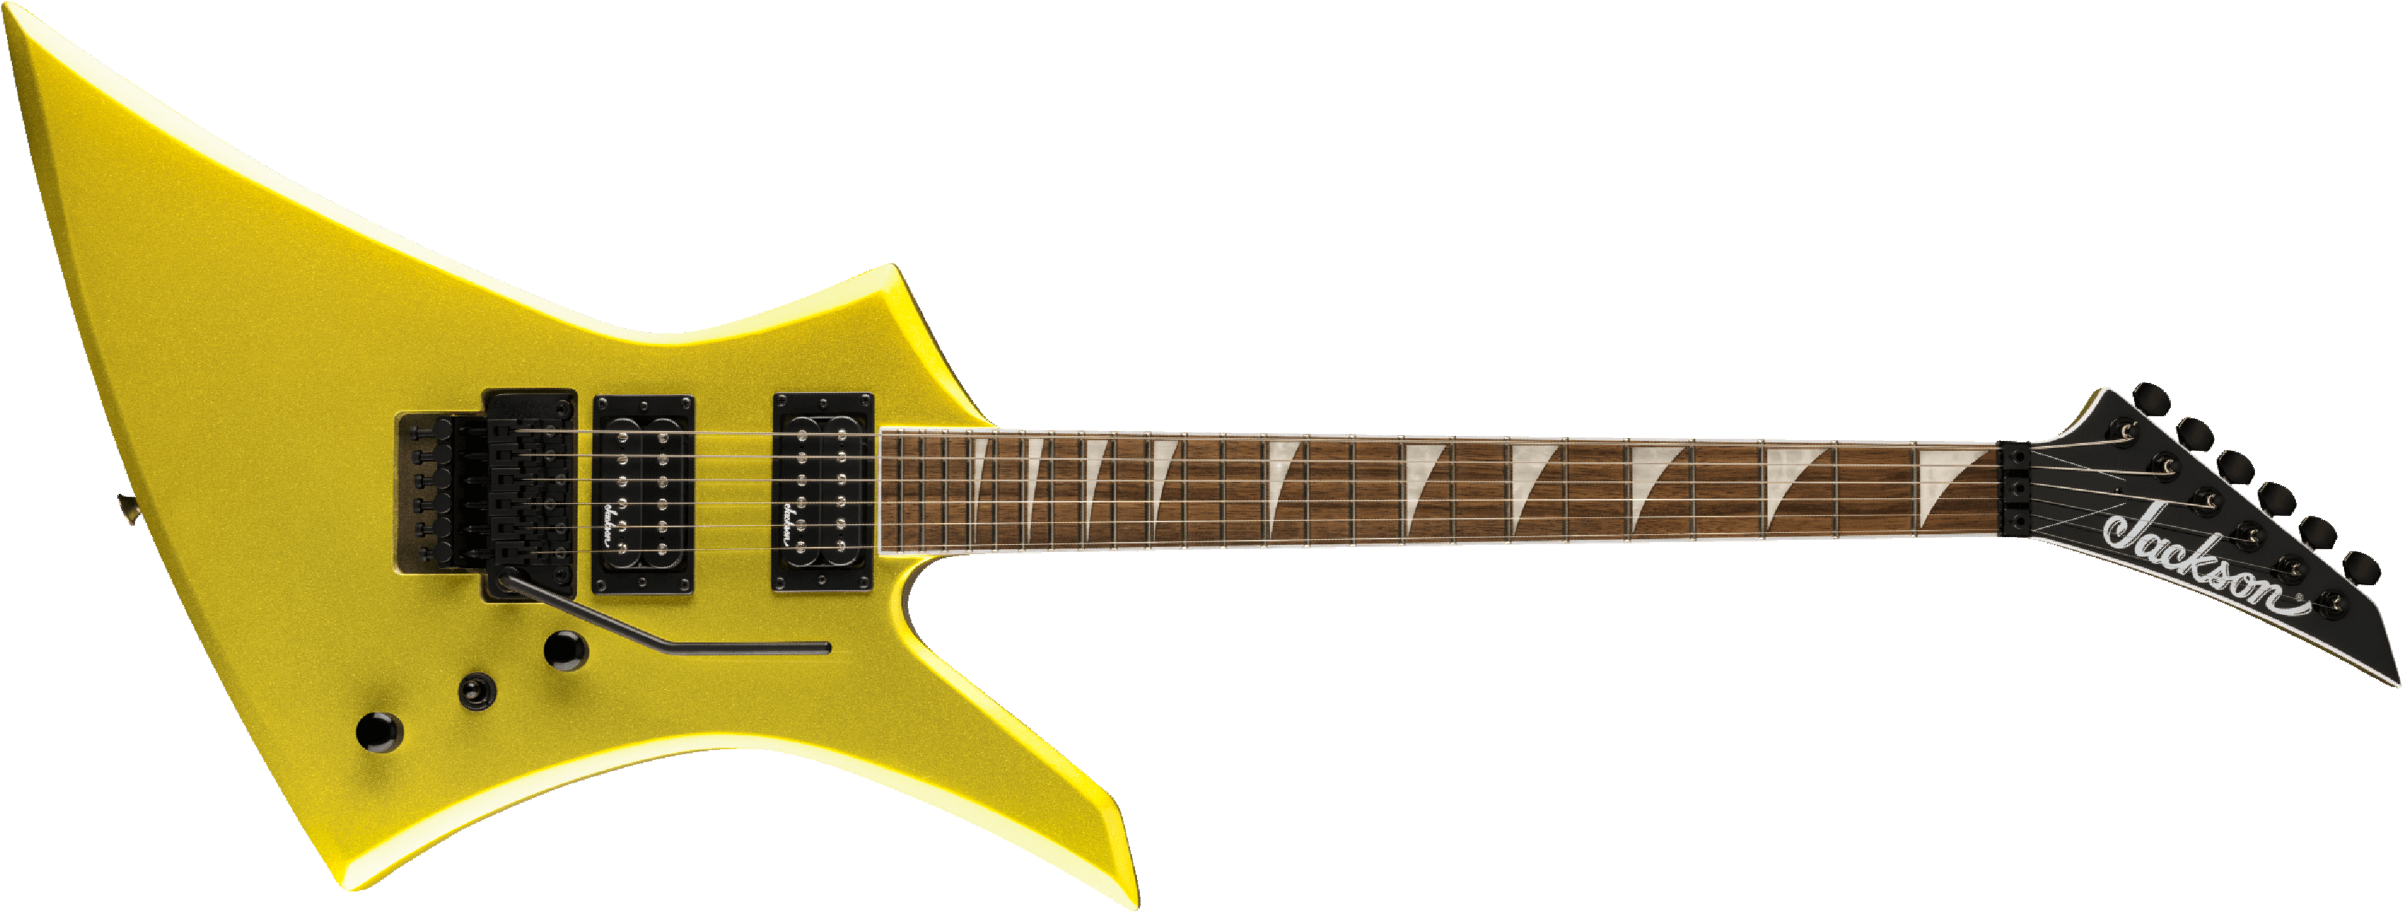 Jackson Kelly Kex X-series Trem Fr Hh Lau - Lime Green Metallic - Guitarra electrica metalica - Main picture